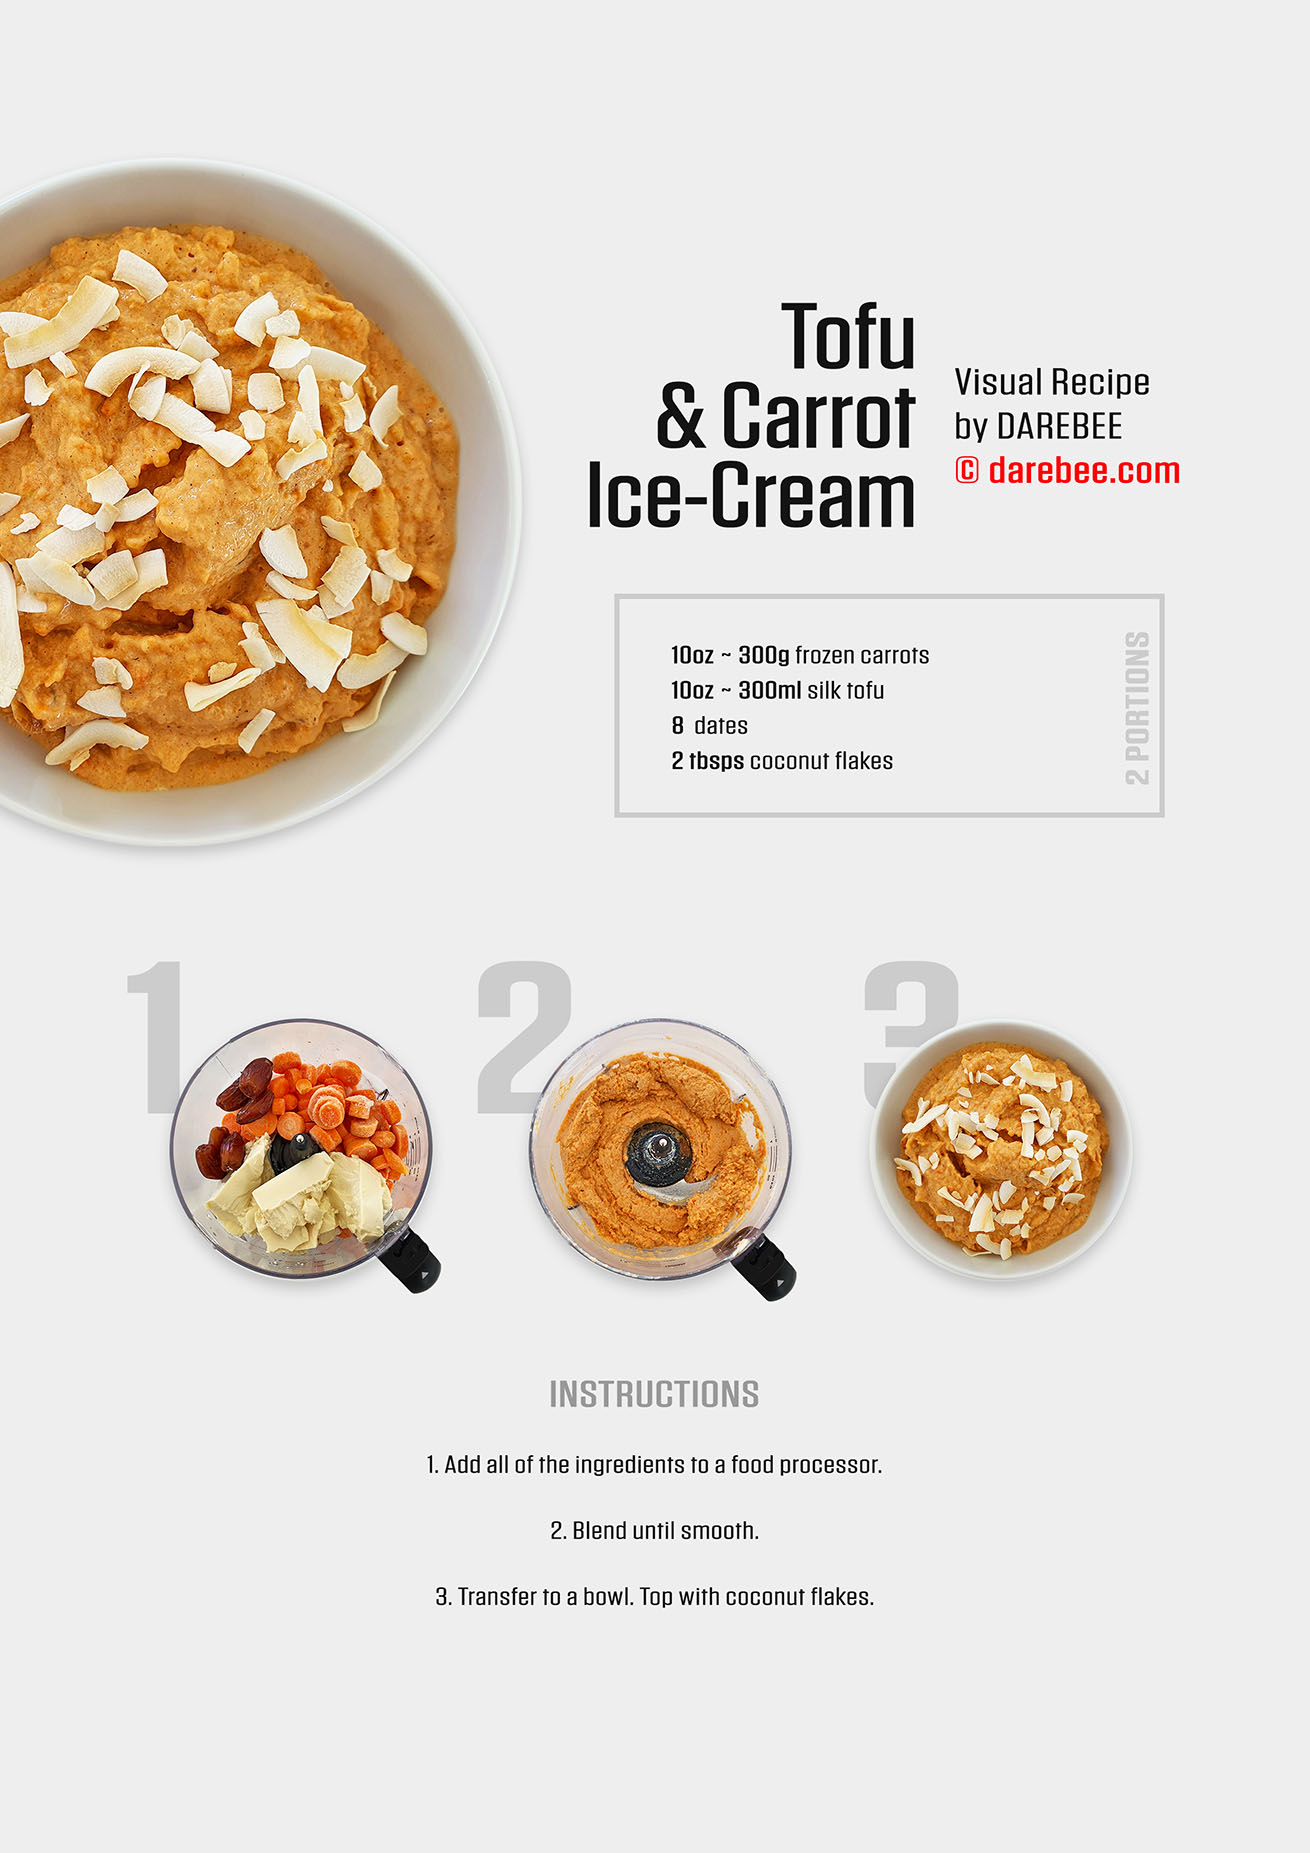 Darebee plant-based, healthy dessert: tofu and carrot ice-cream